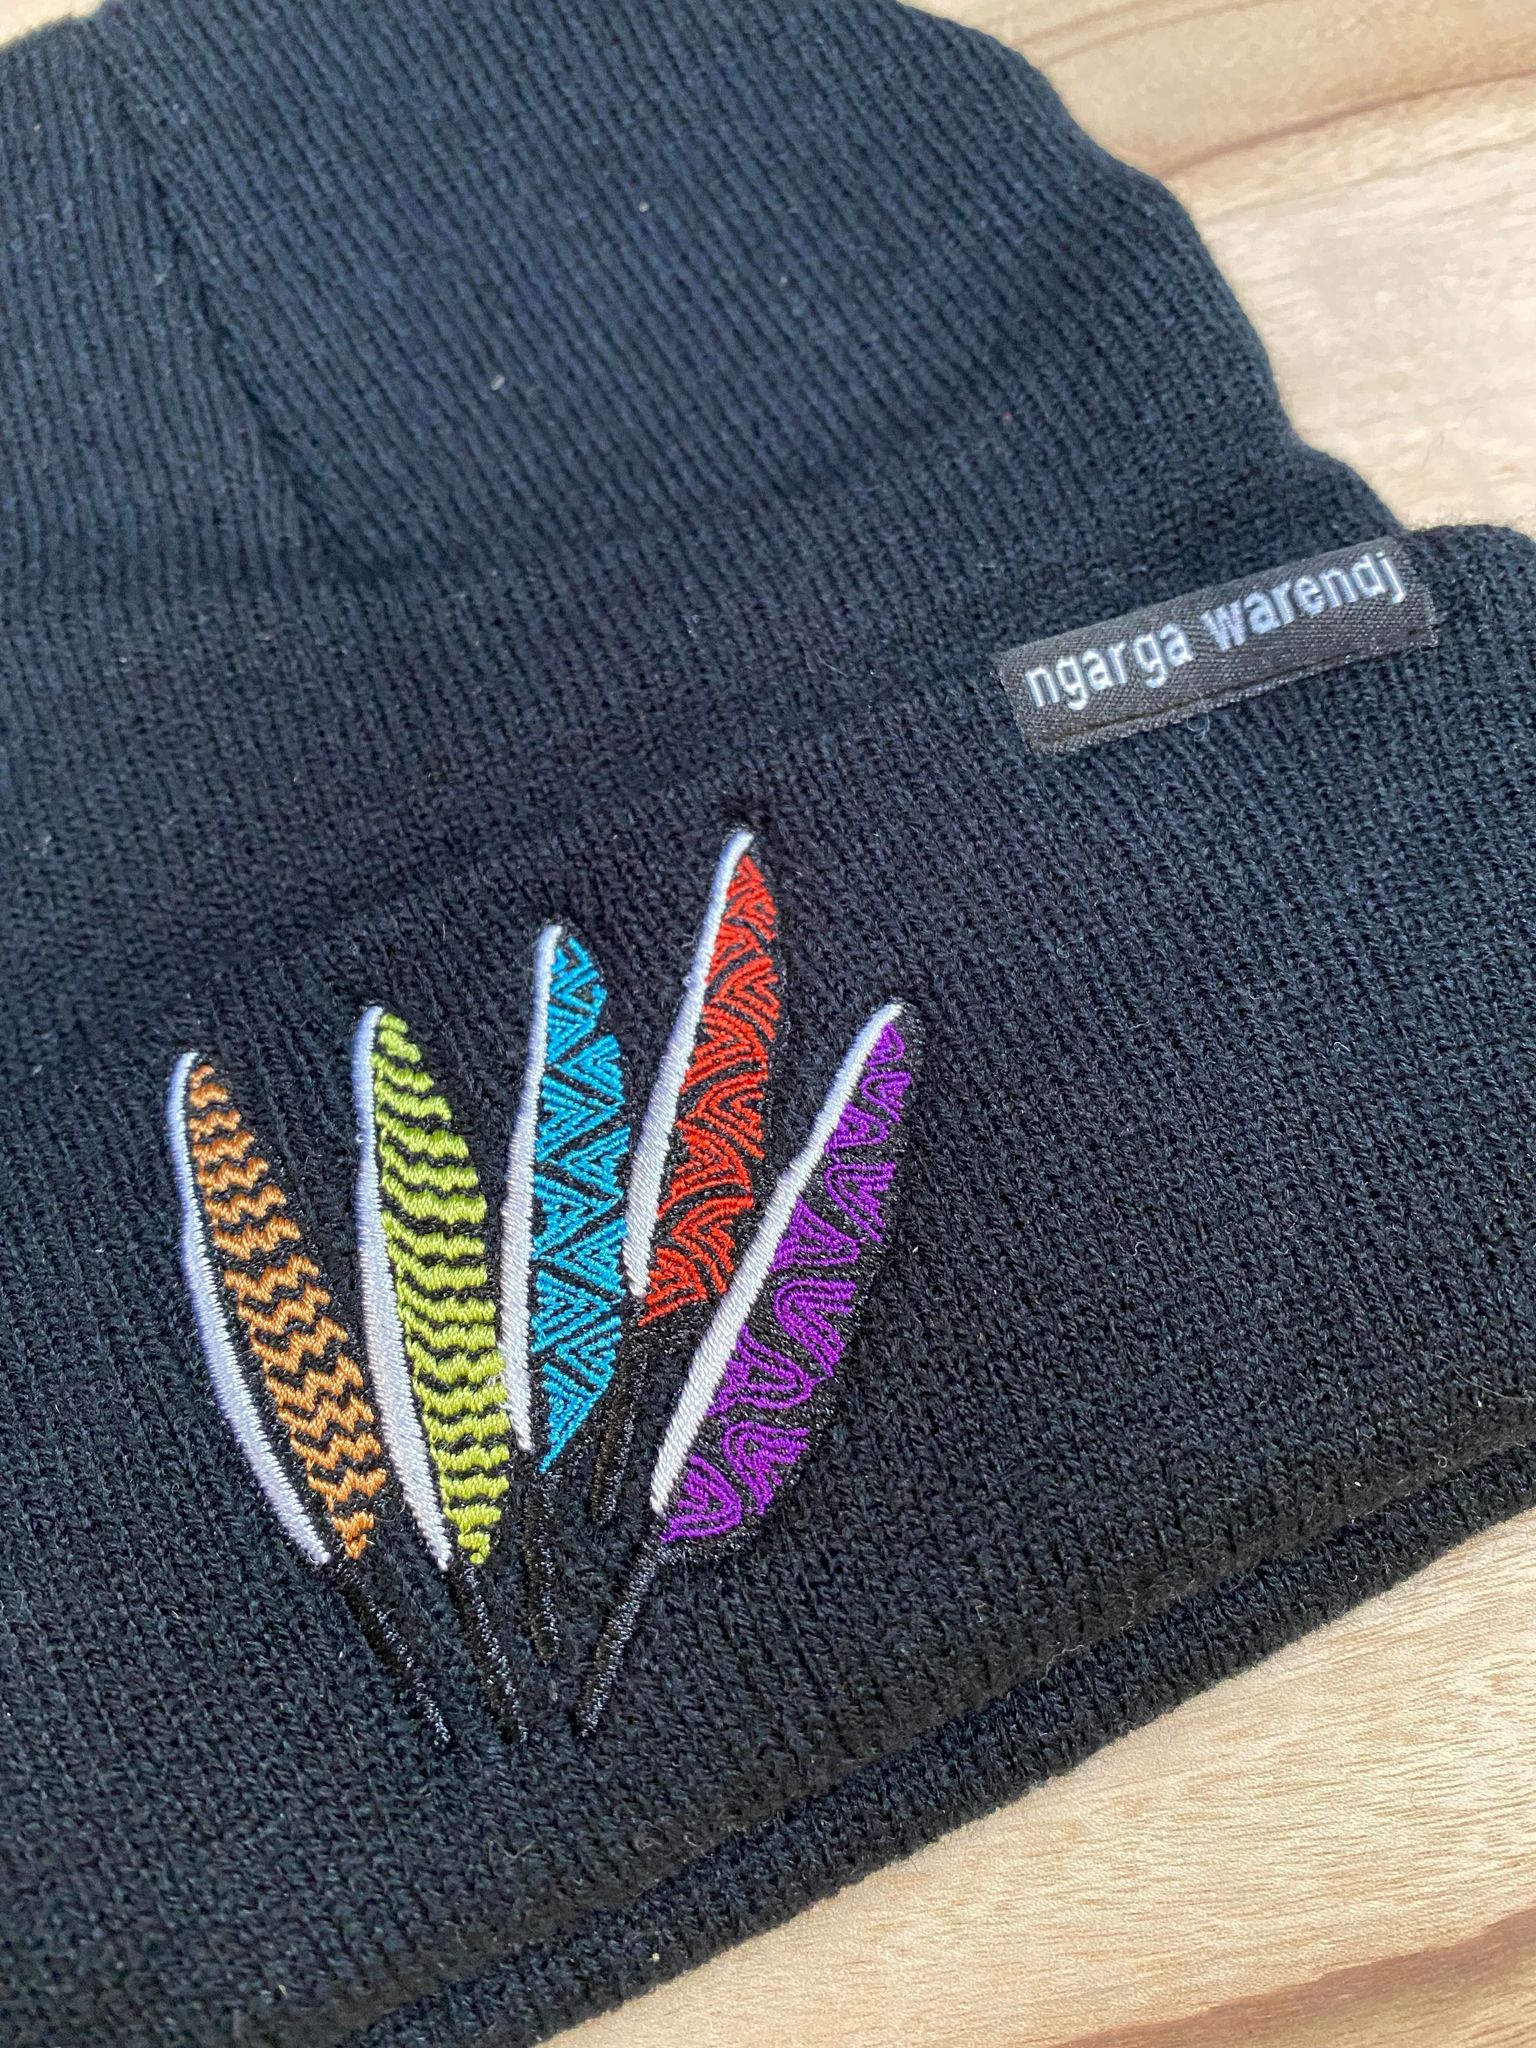 Ngarga Warendj Beanie - Kulin Nation Embroidered Feathers (Mick Harding)